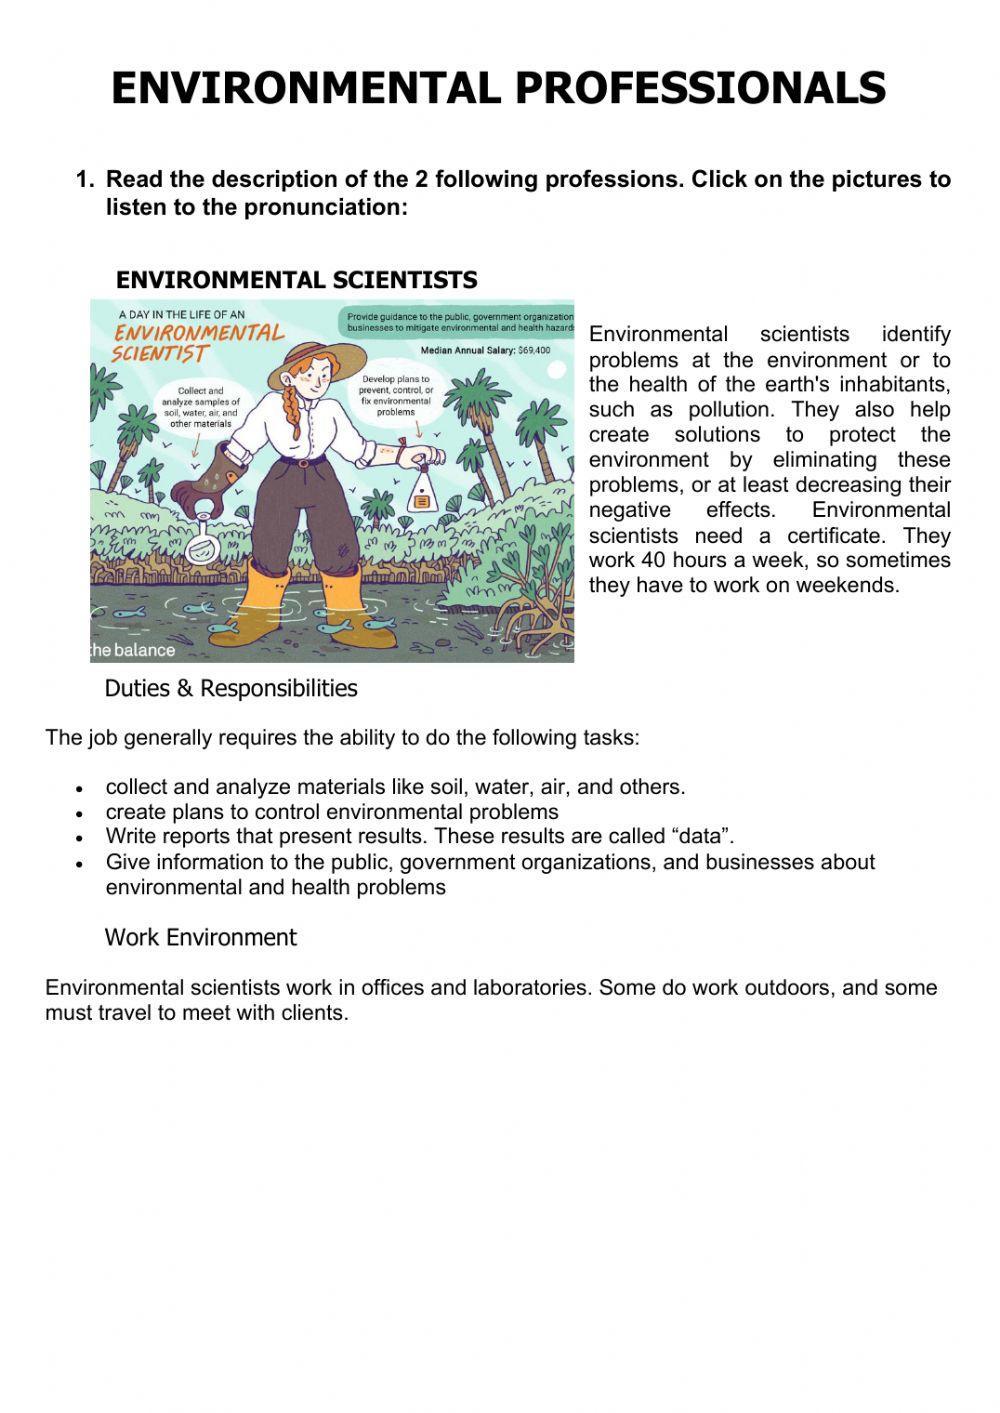 Environmental professionals